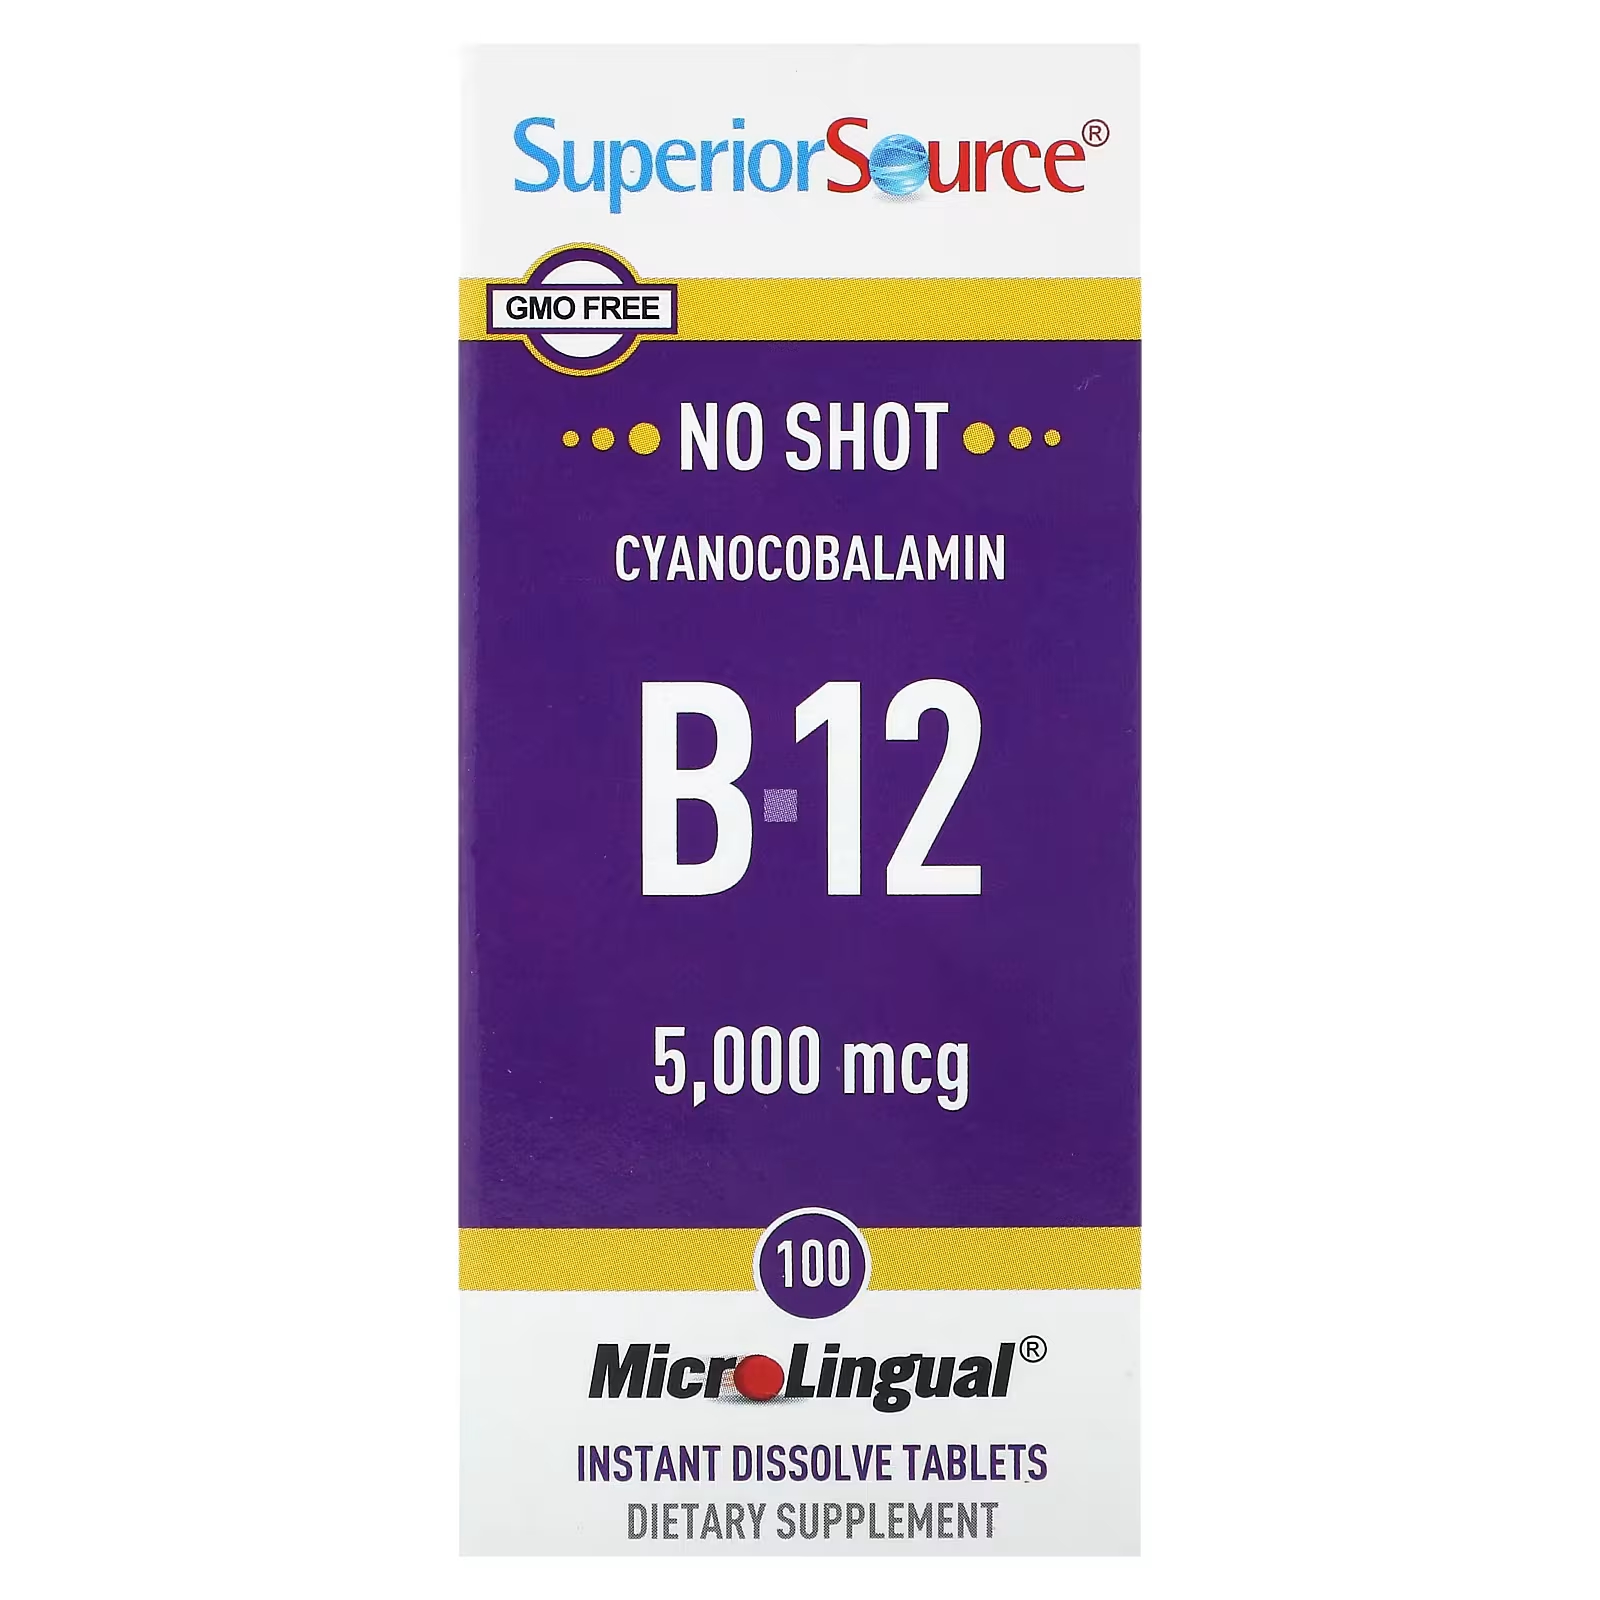 Пищевая добавка MicroLingual Superior Source B-12 цианокобаламин, 100 растворяющихся таблеток цианокобаламин b 12 superior source 1000 мкг 100 таблеток